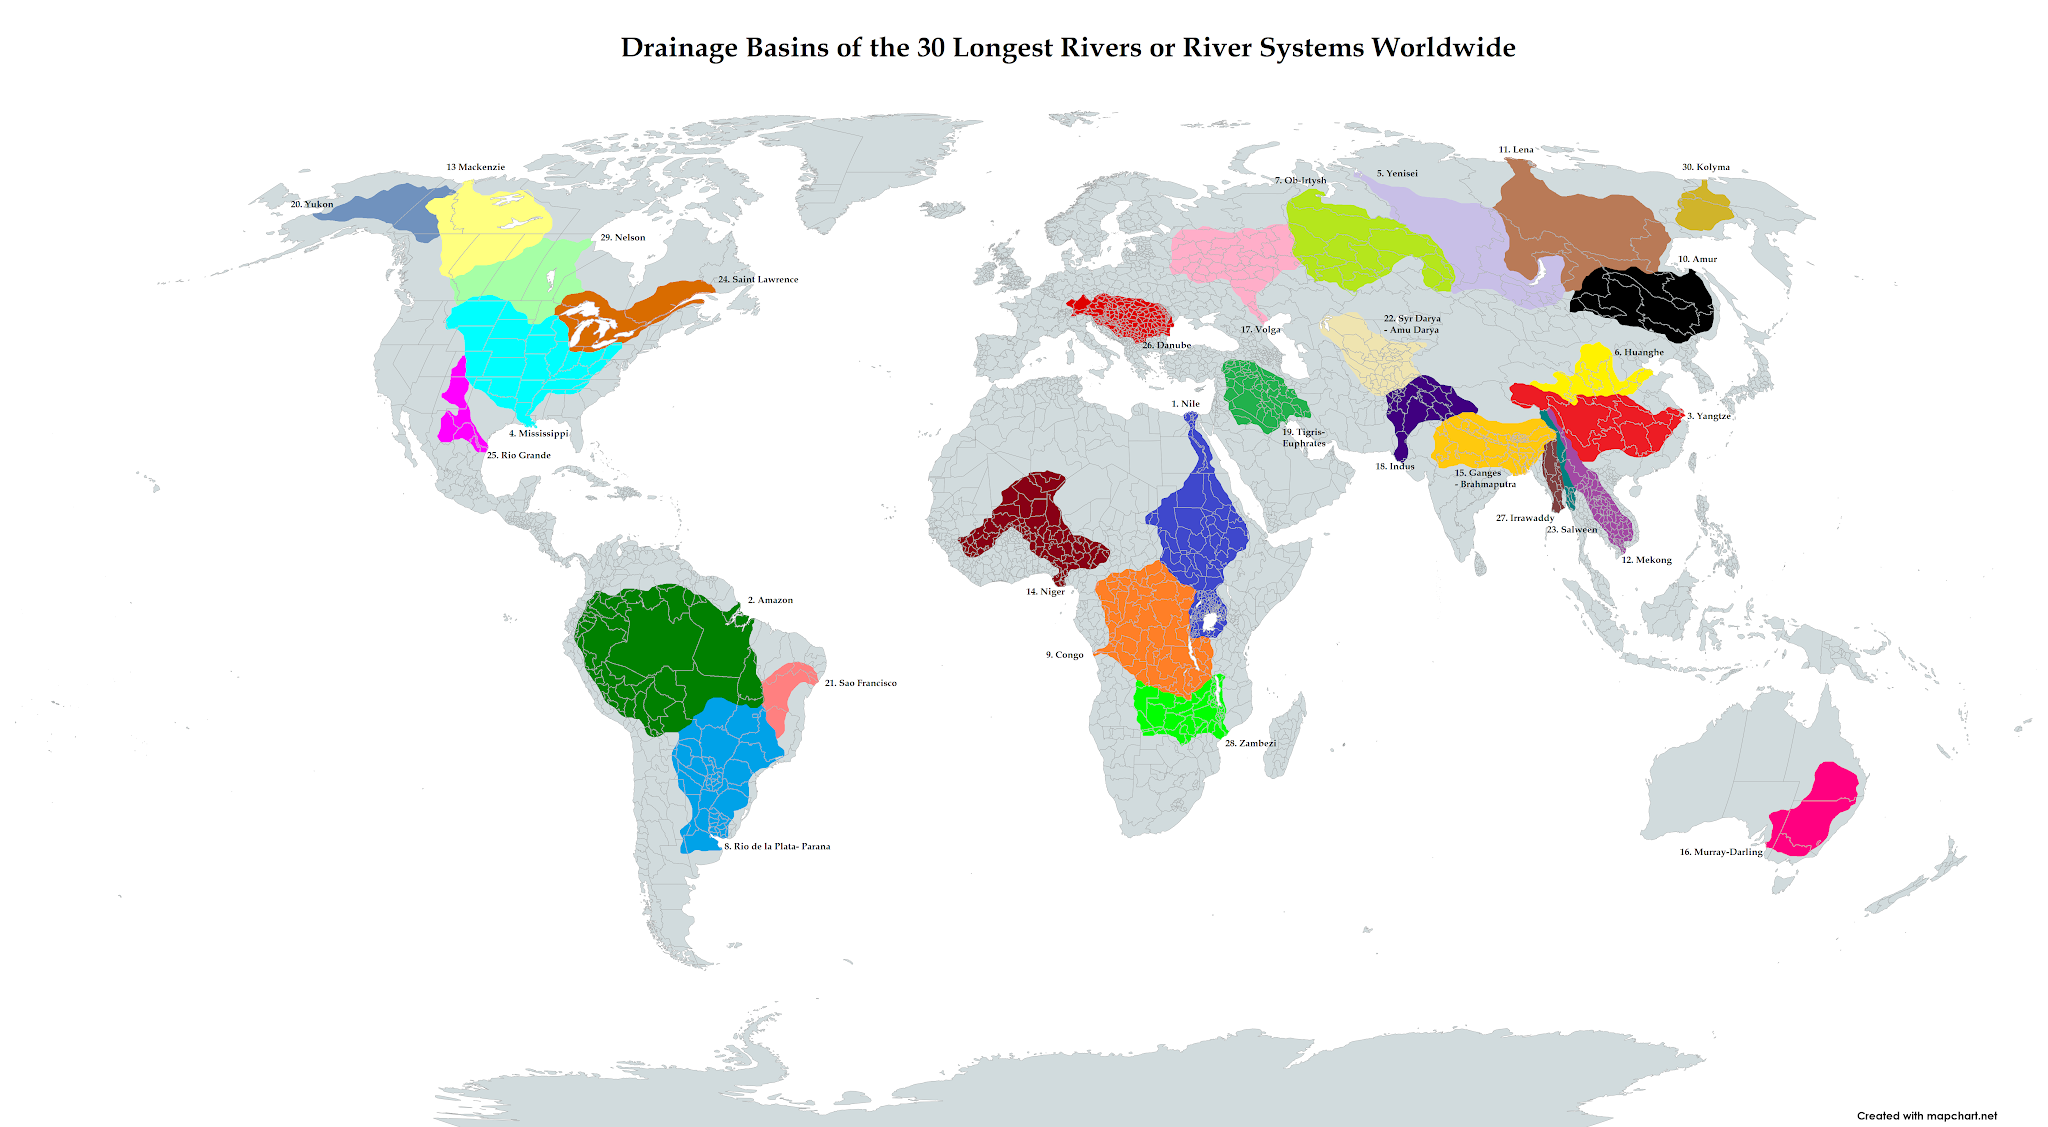 Drainage basins of the world's longest rivers